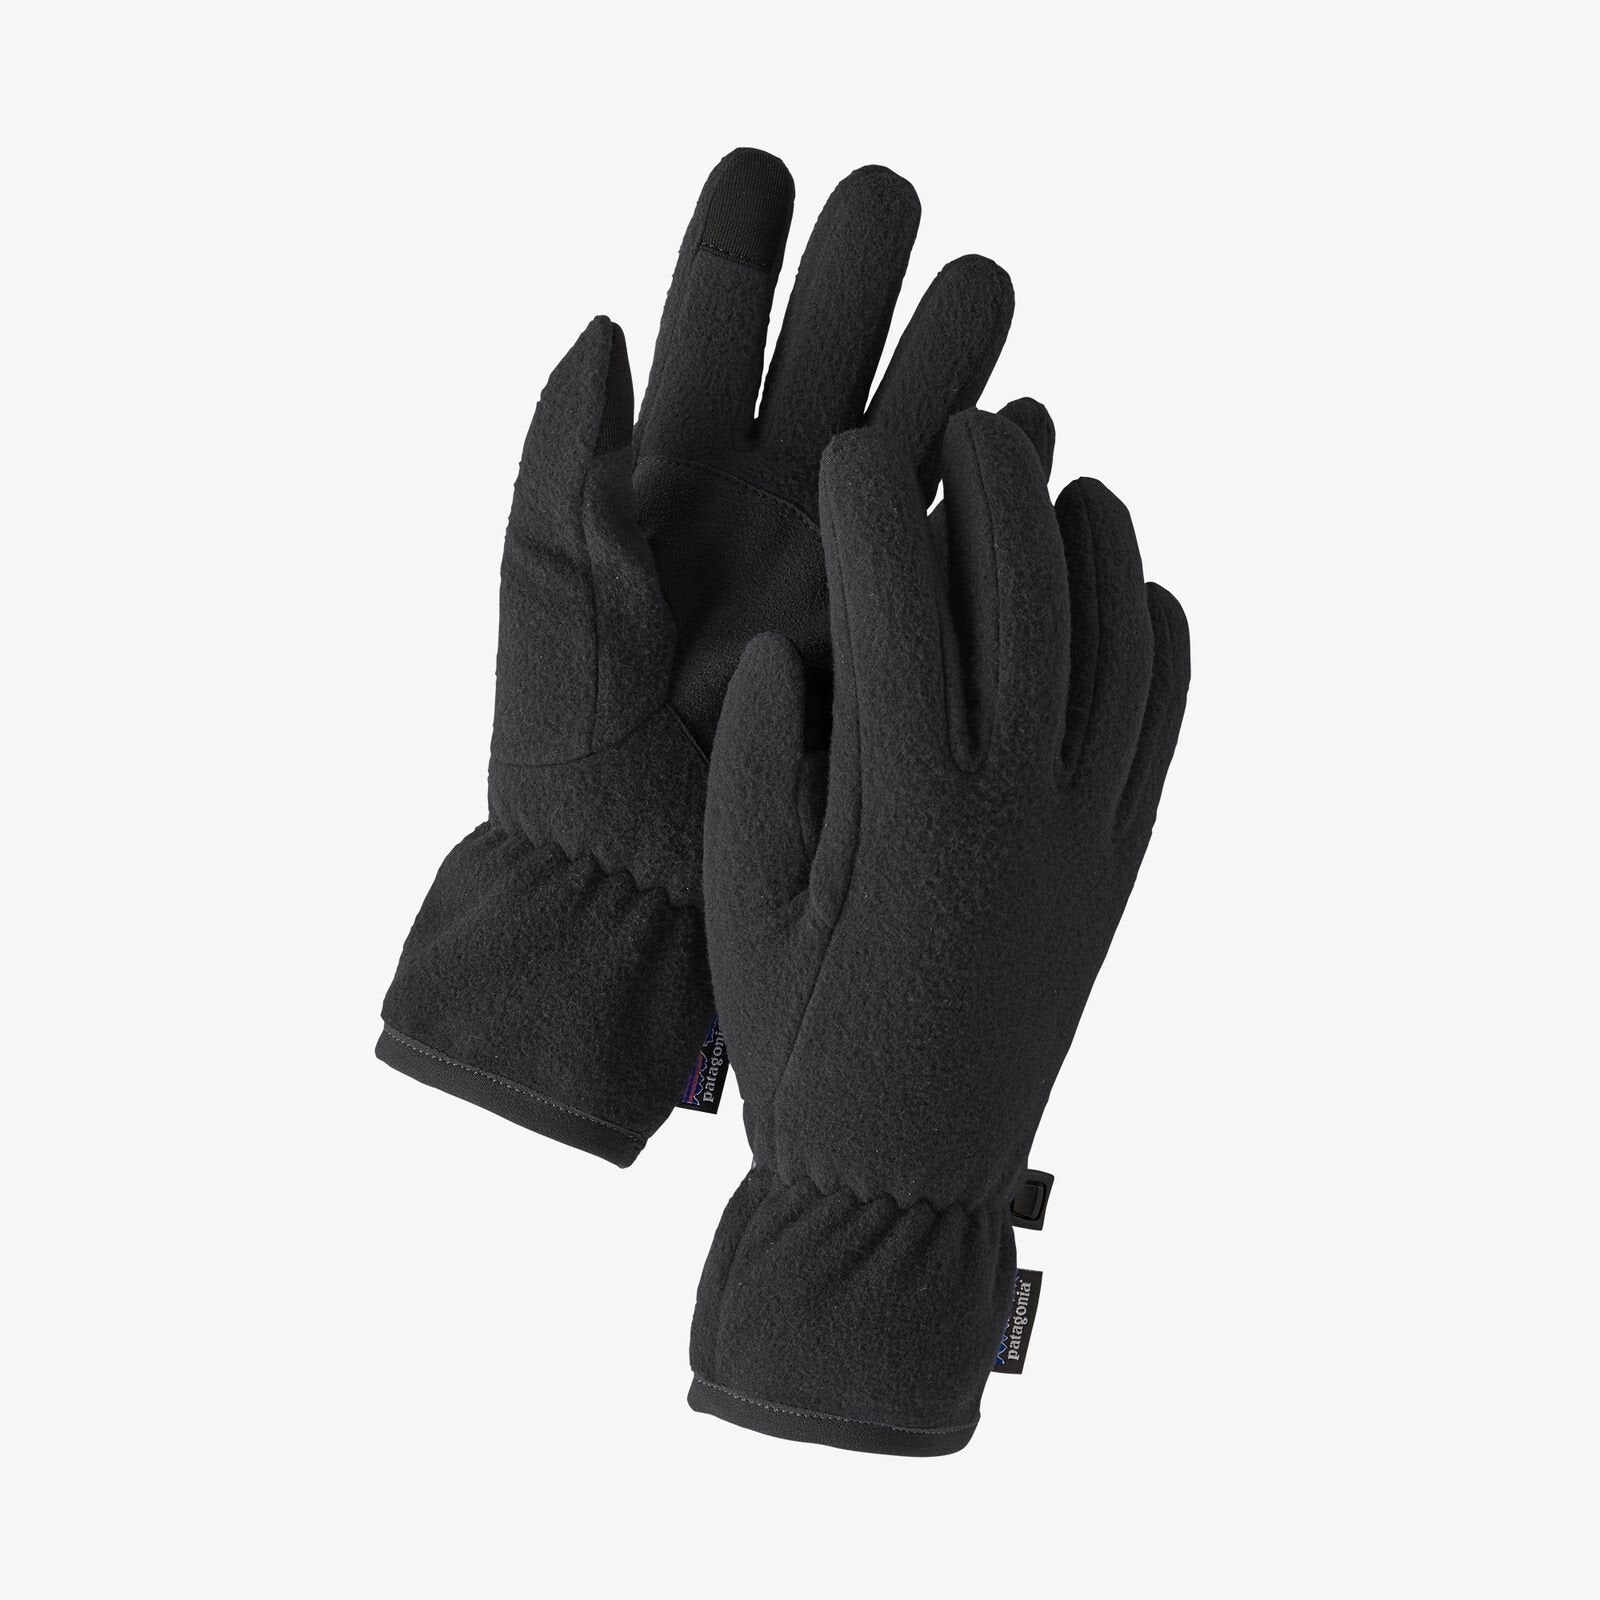 Patagonia unisex gants enfant synchilla noir black s